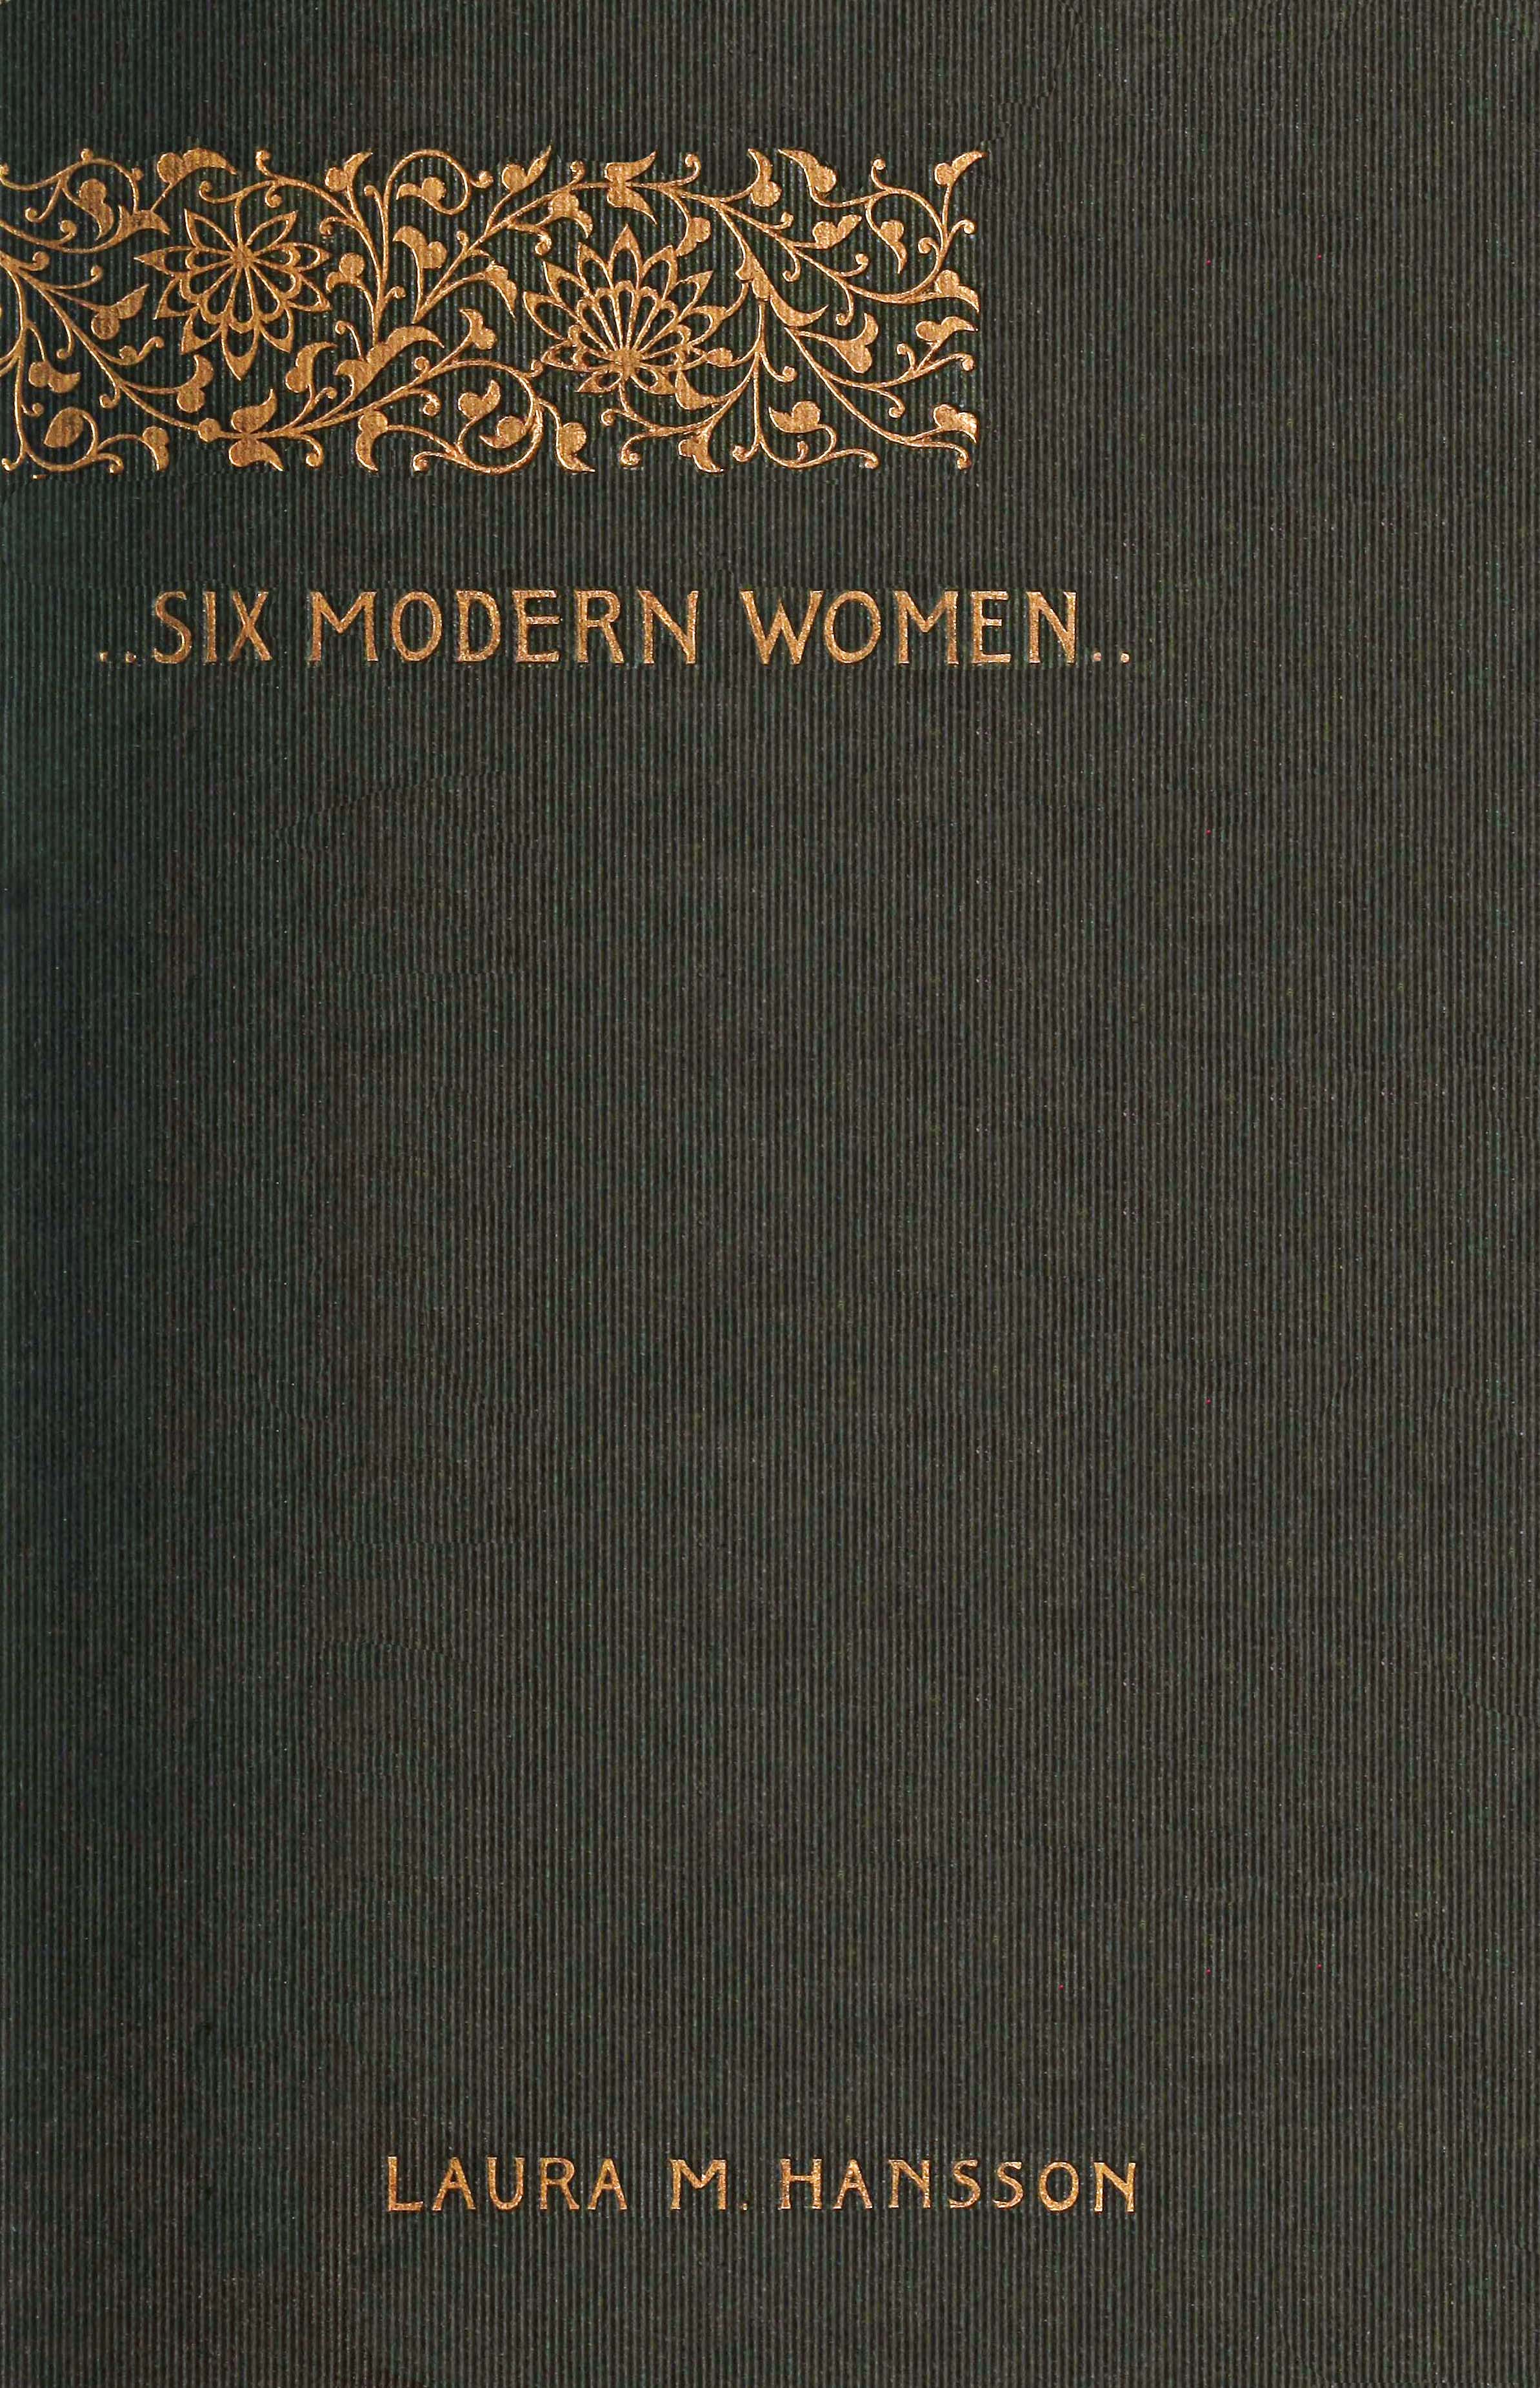 Six modern women, by Laura Marholm Hansson—A Project Gutenberg eBook photo